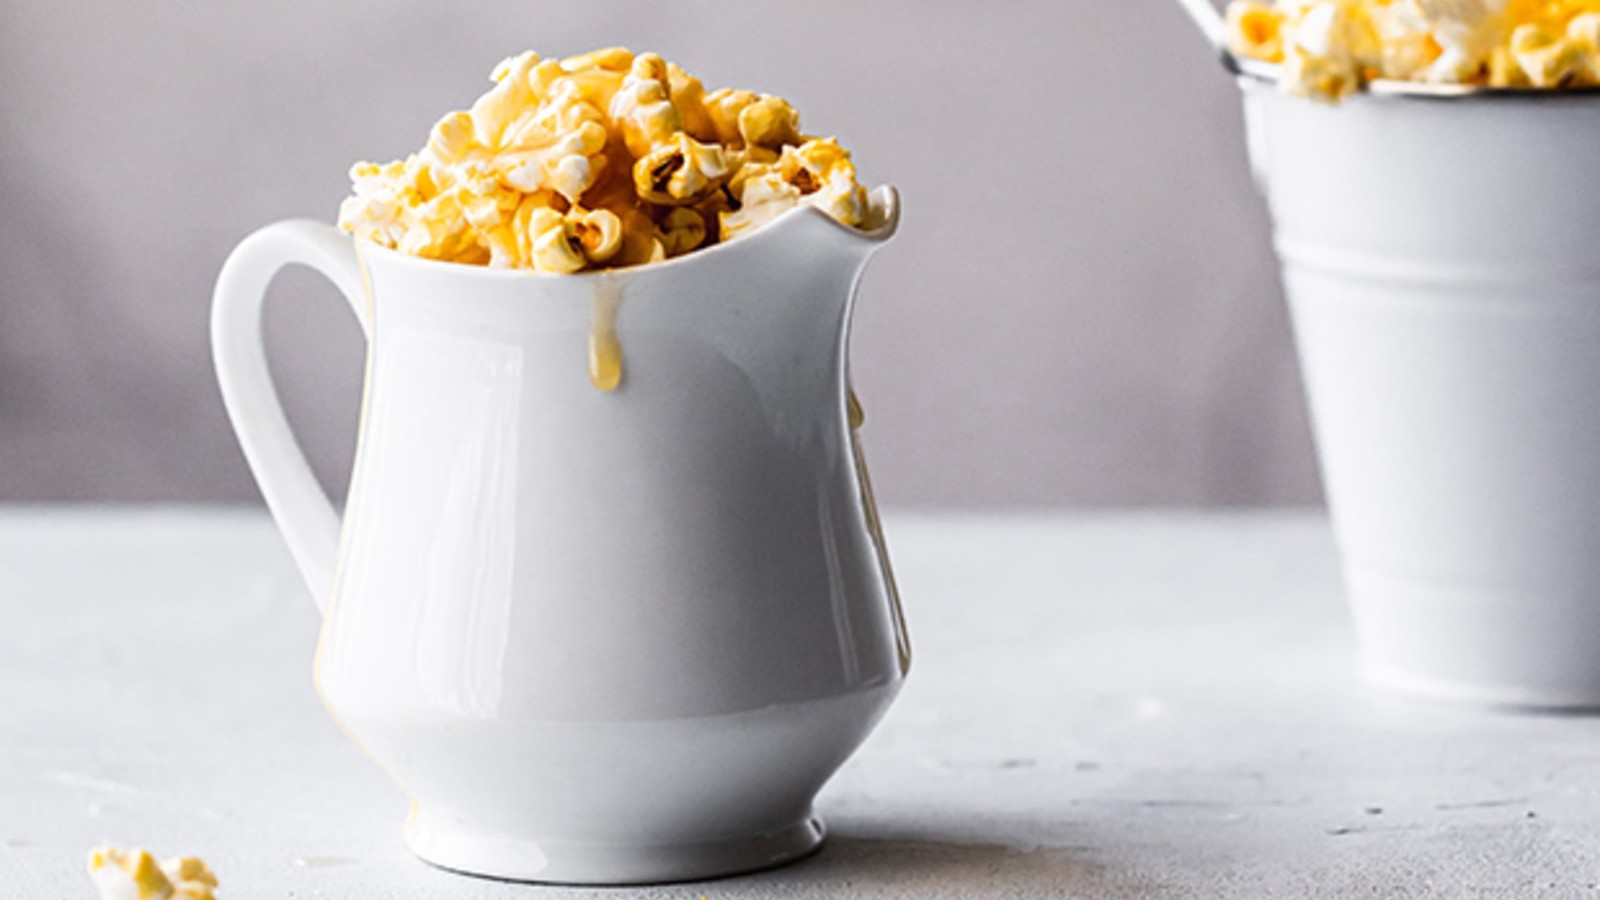 Image of Homemade Toffee Popcorn